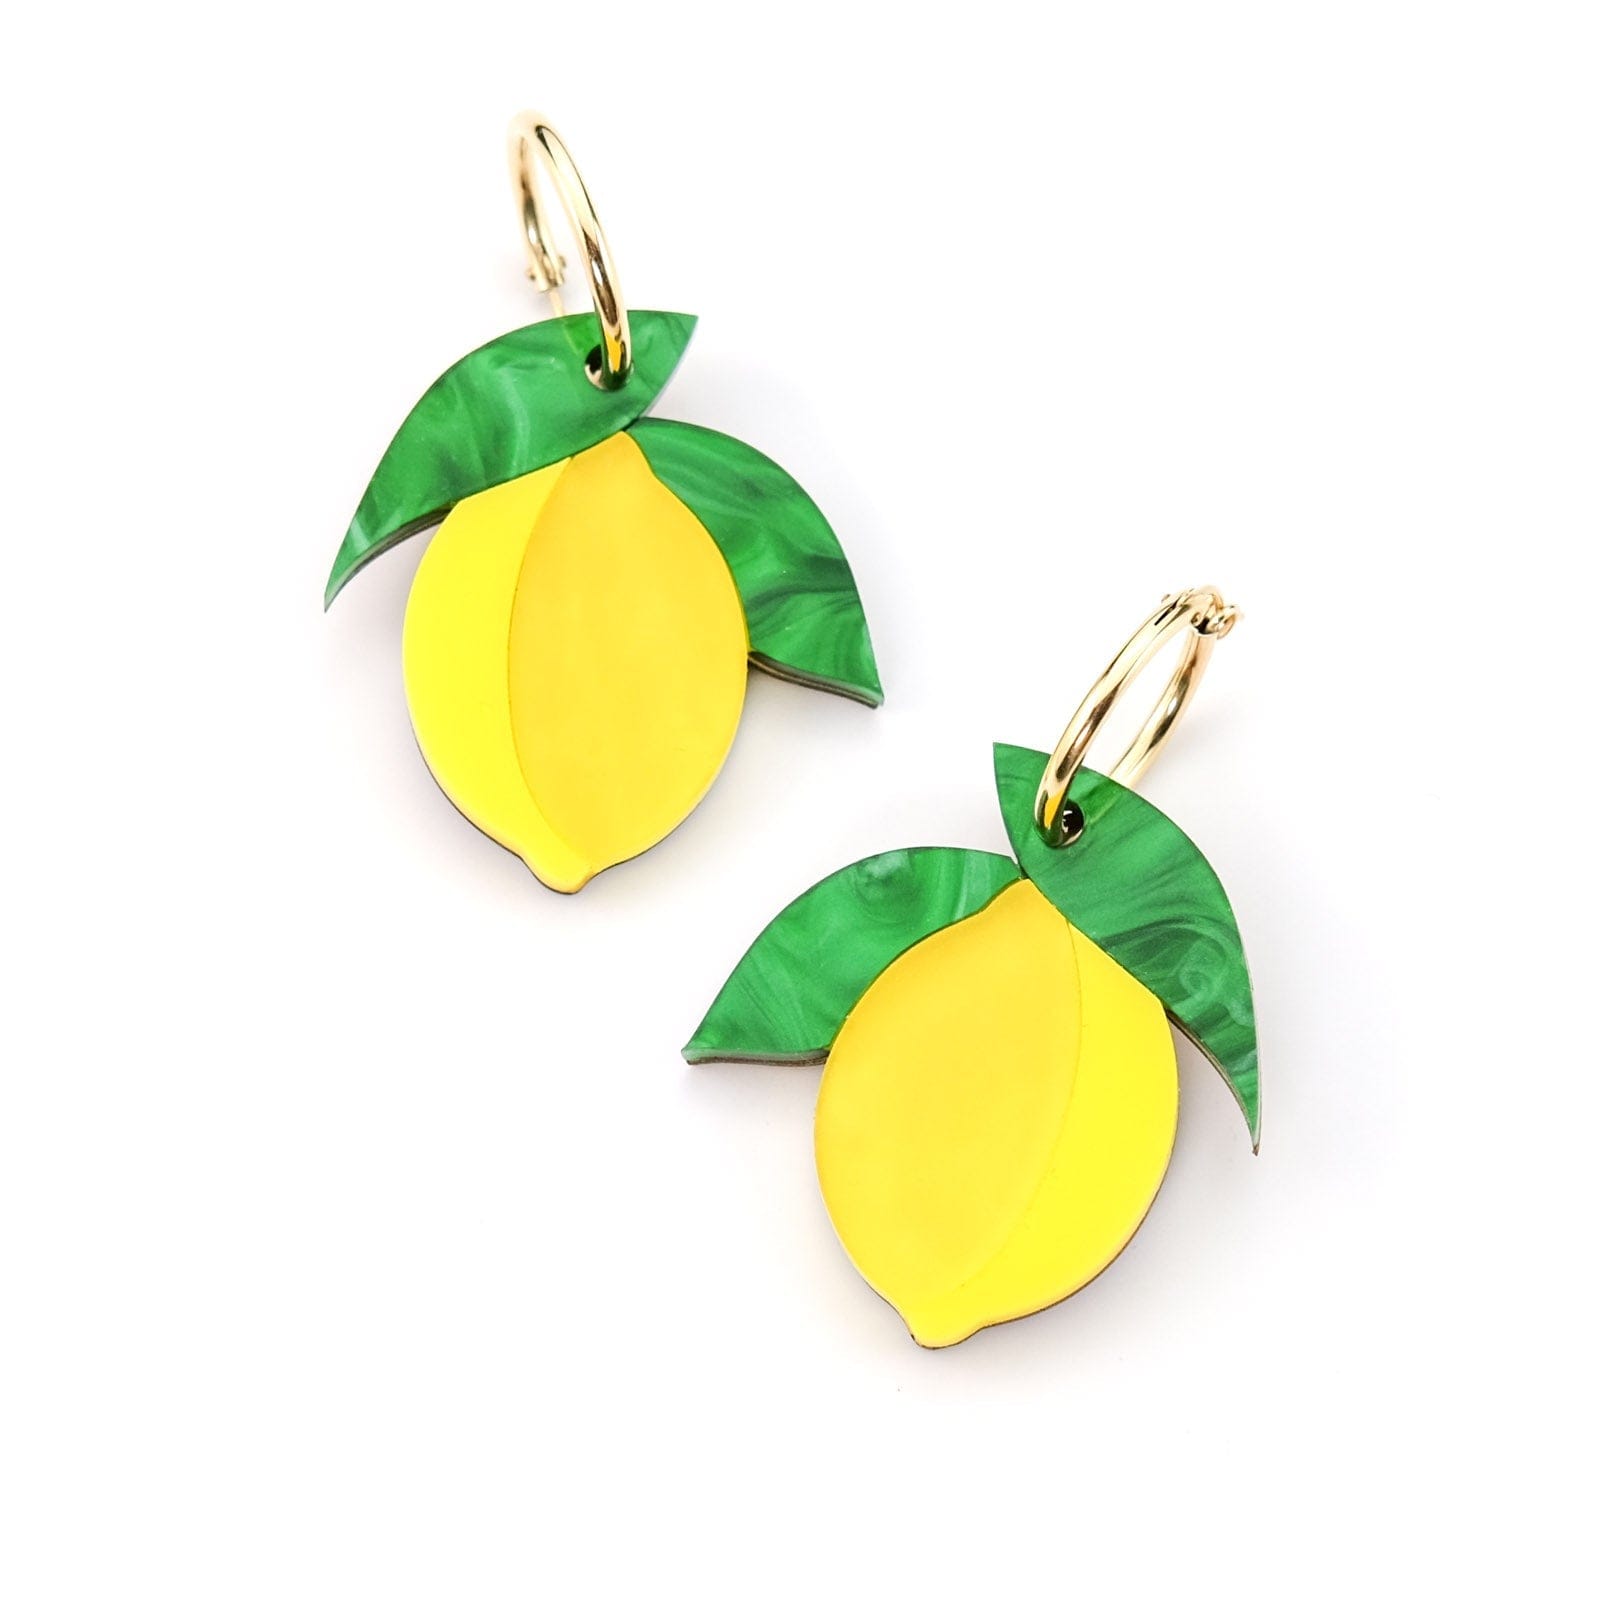 Sicilian lemon dangly earrings with gold-filled hoops